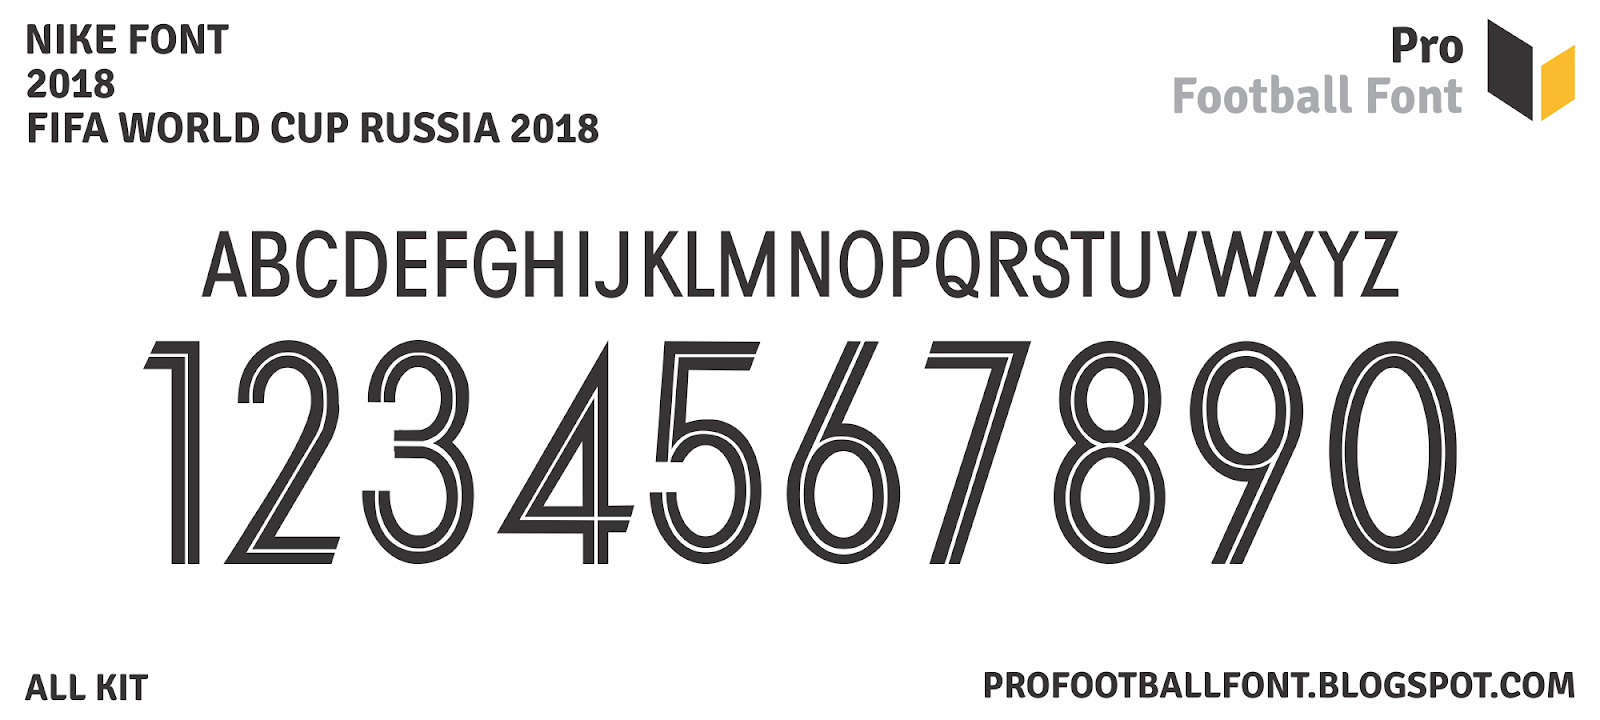 font nike world cup 2018 ttf free